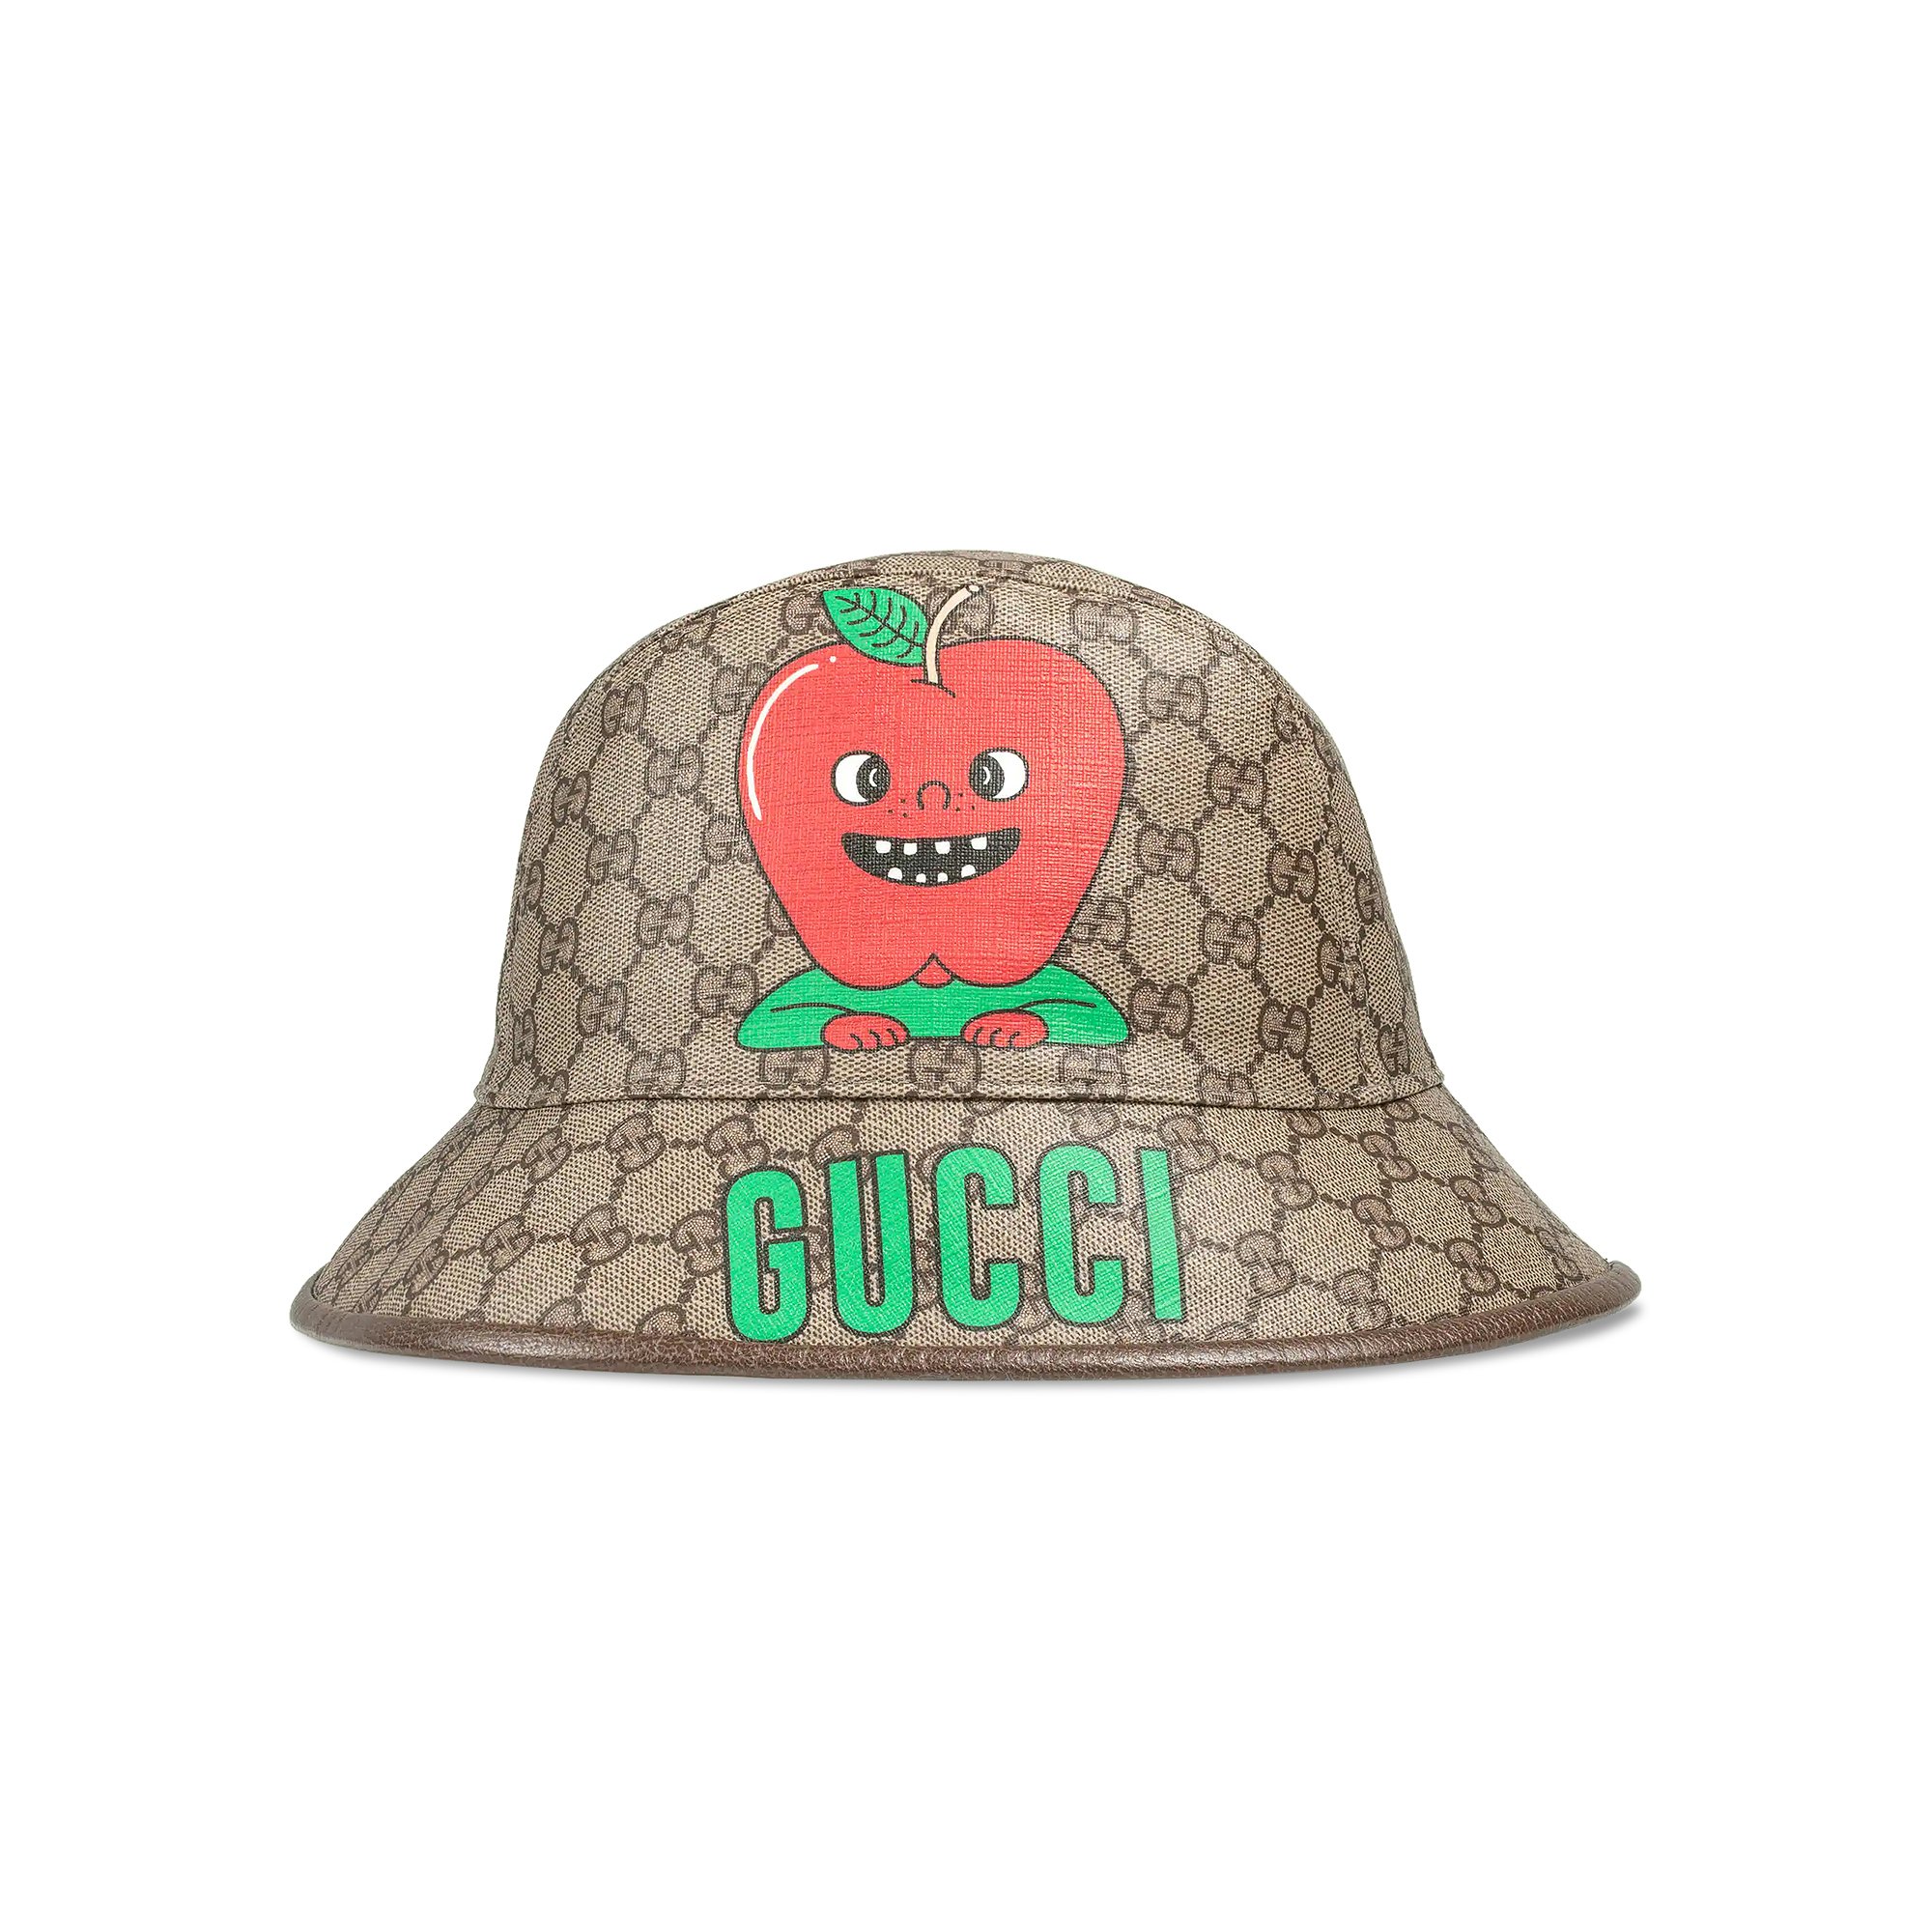 Buy Gucci Apple Supreme Fedora Hat 'Beige And Ebony' - 700667